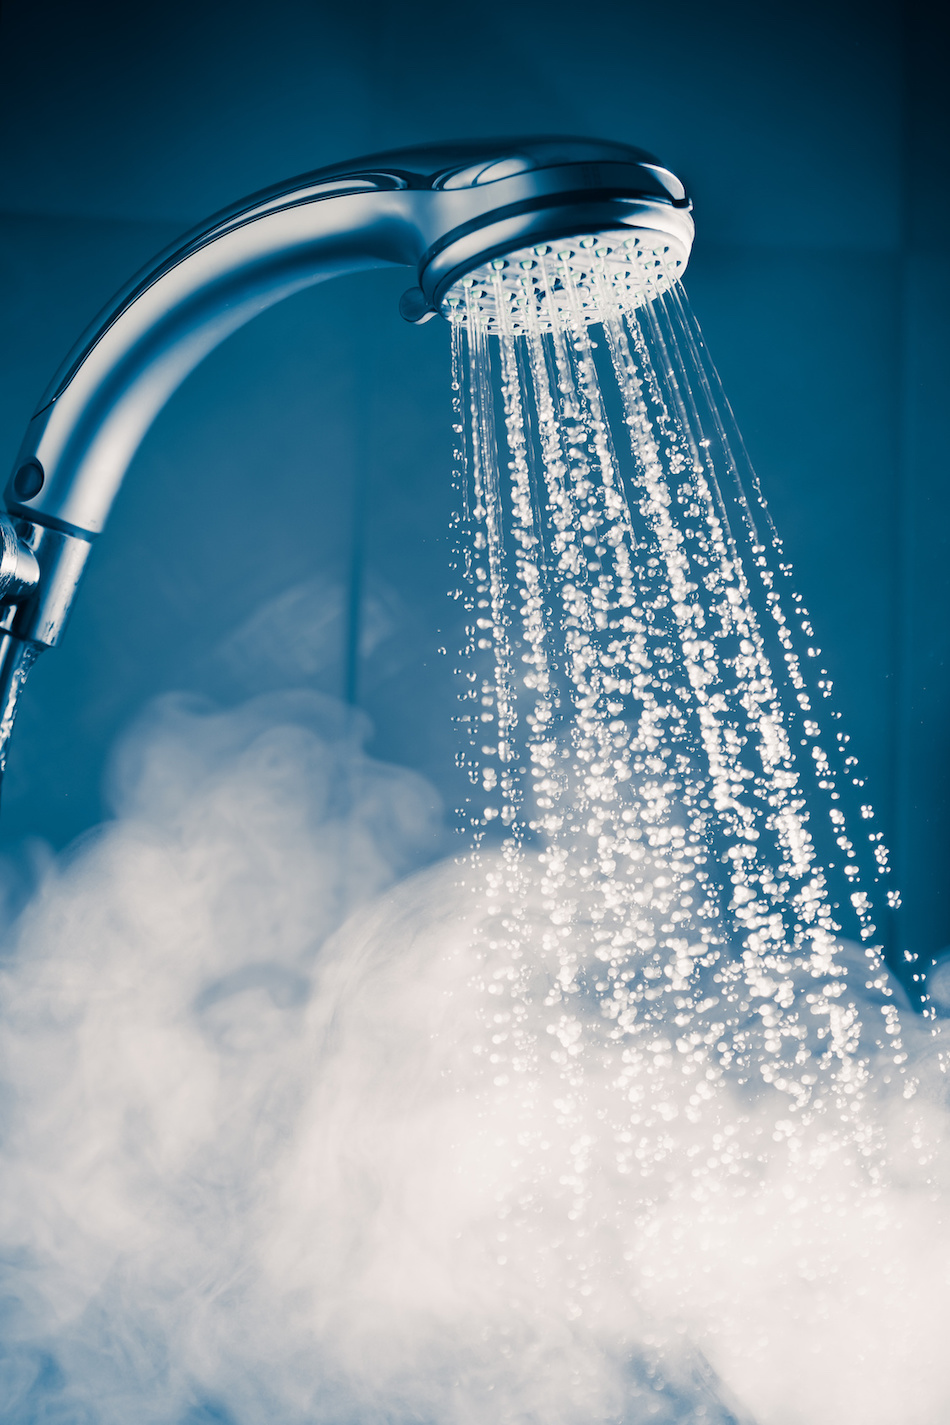 Heating Water in Shower